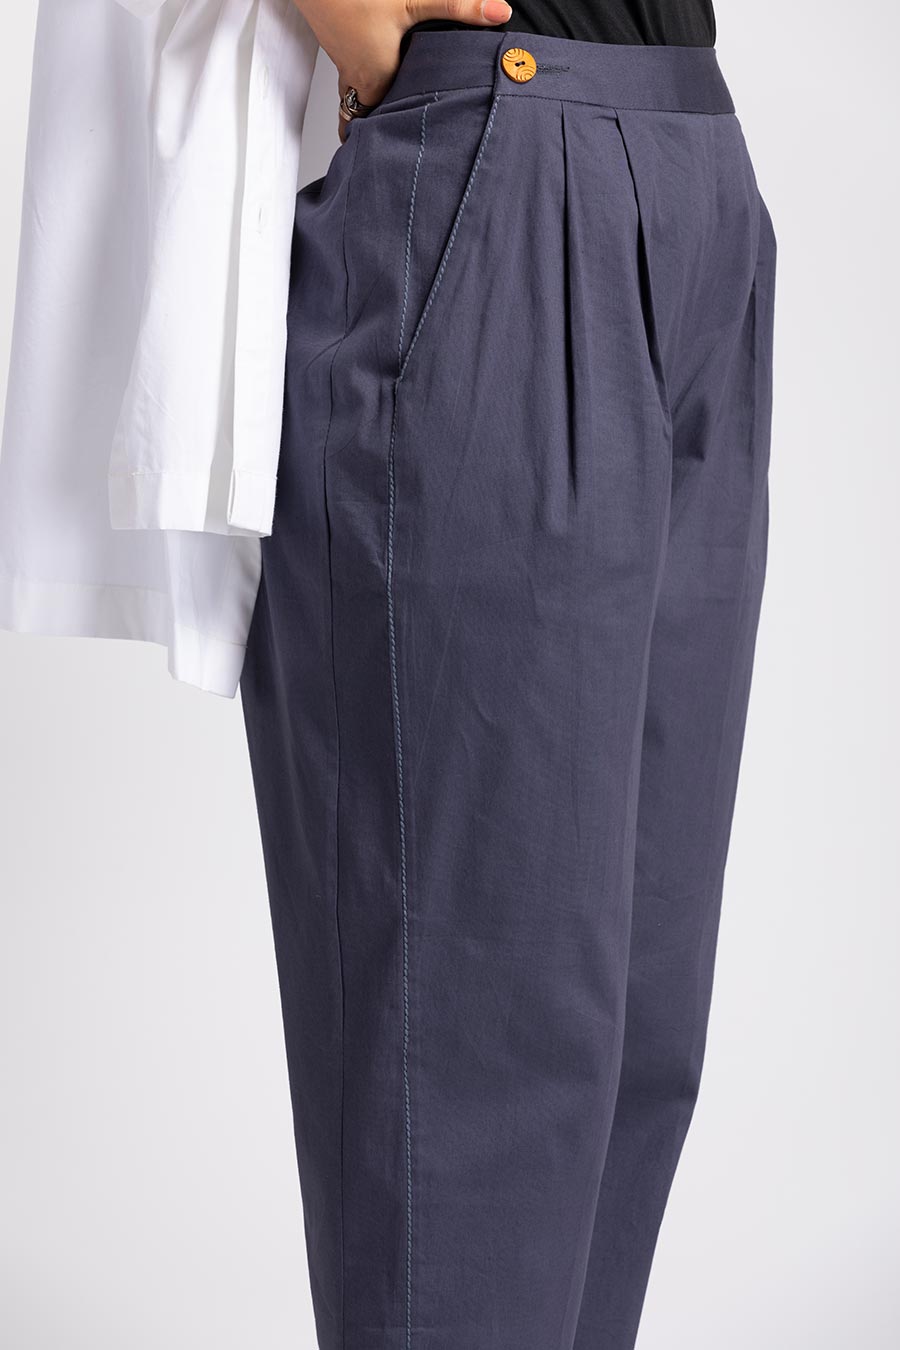 Valiant Grey Cotton Lycra Pants